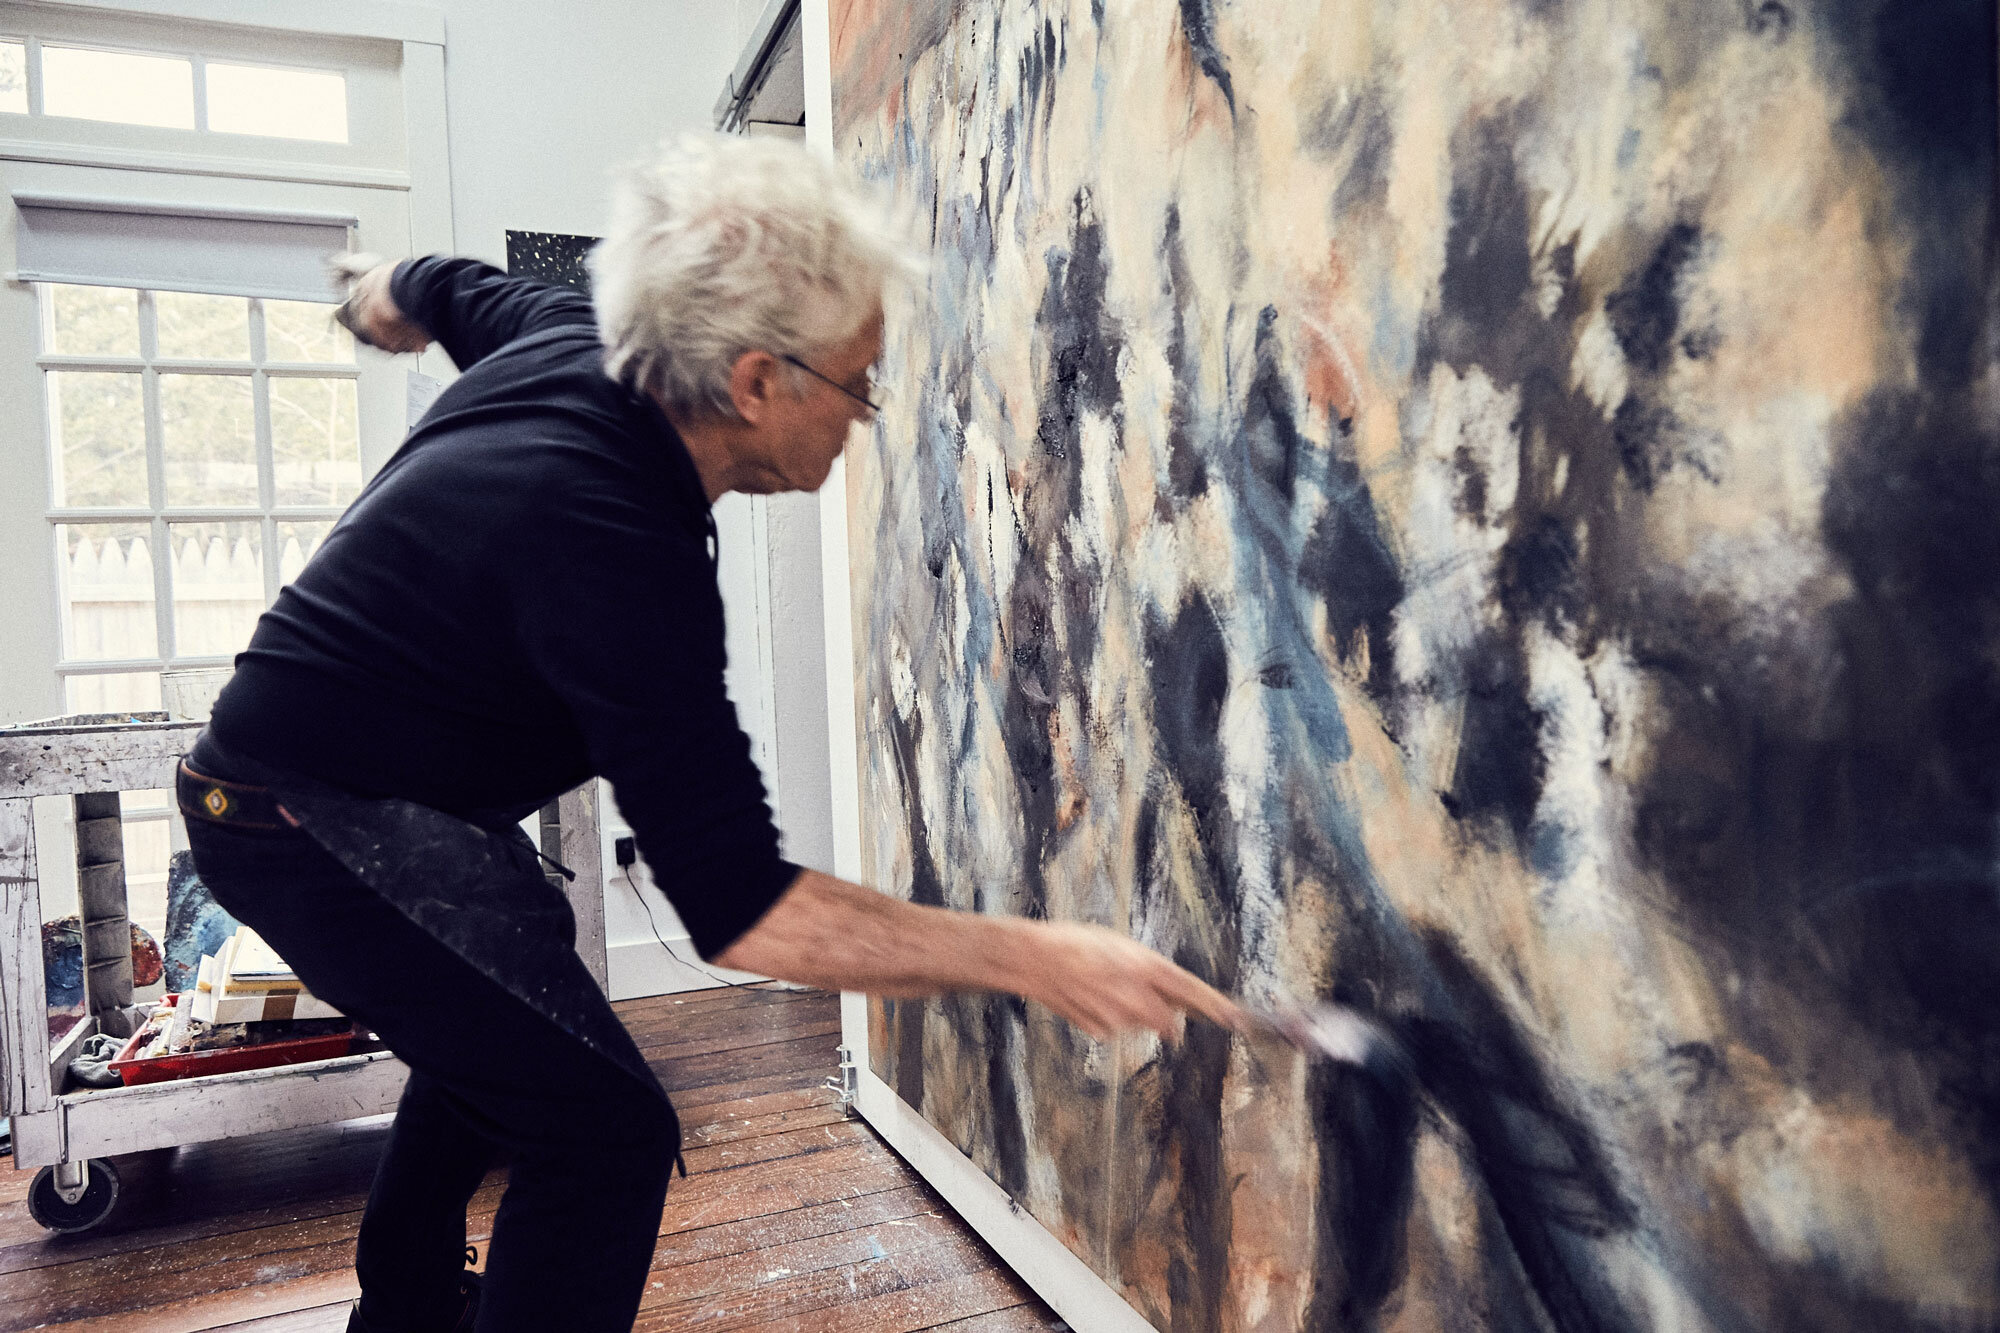  Working the paint at the Westport Studio, 2016  Photo: Chris Cramer 